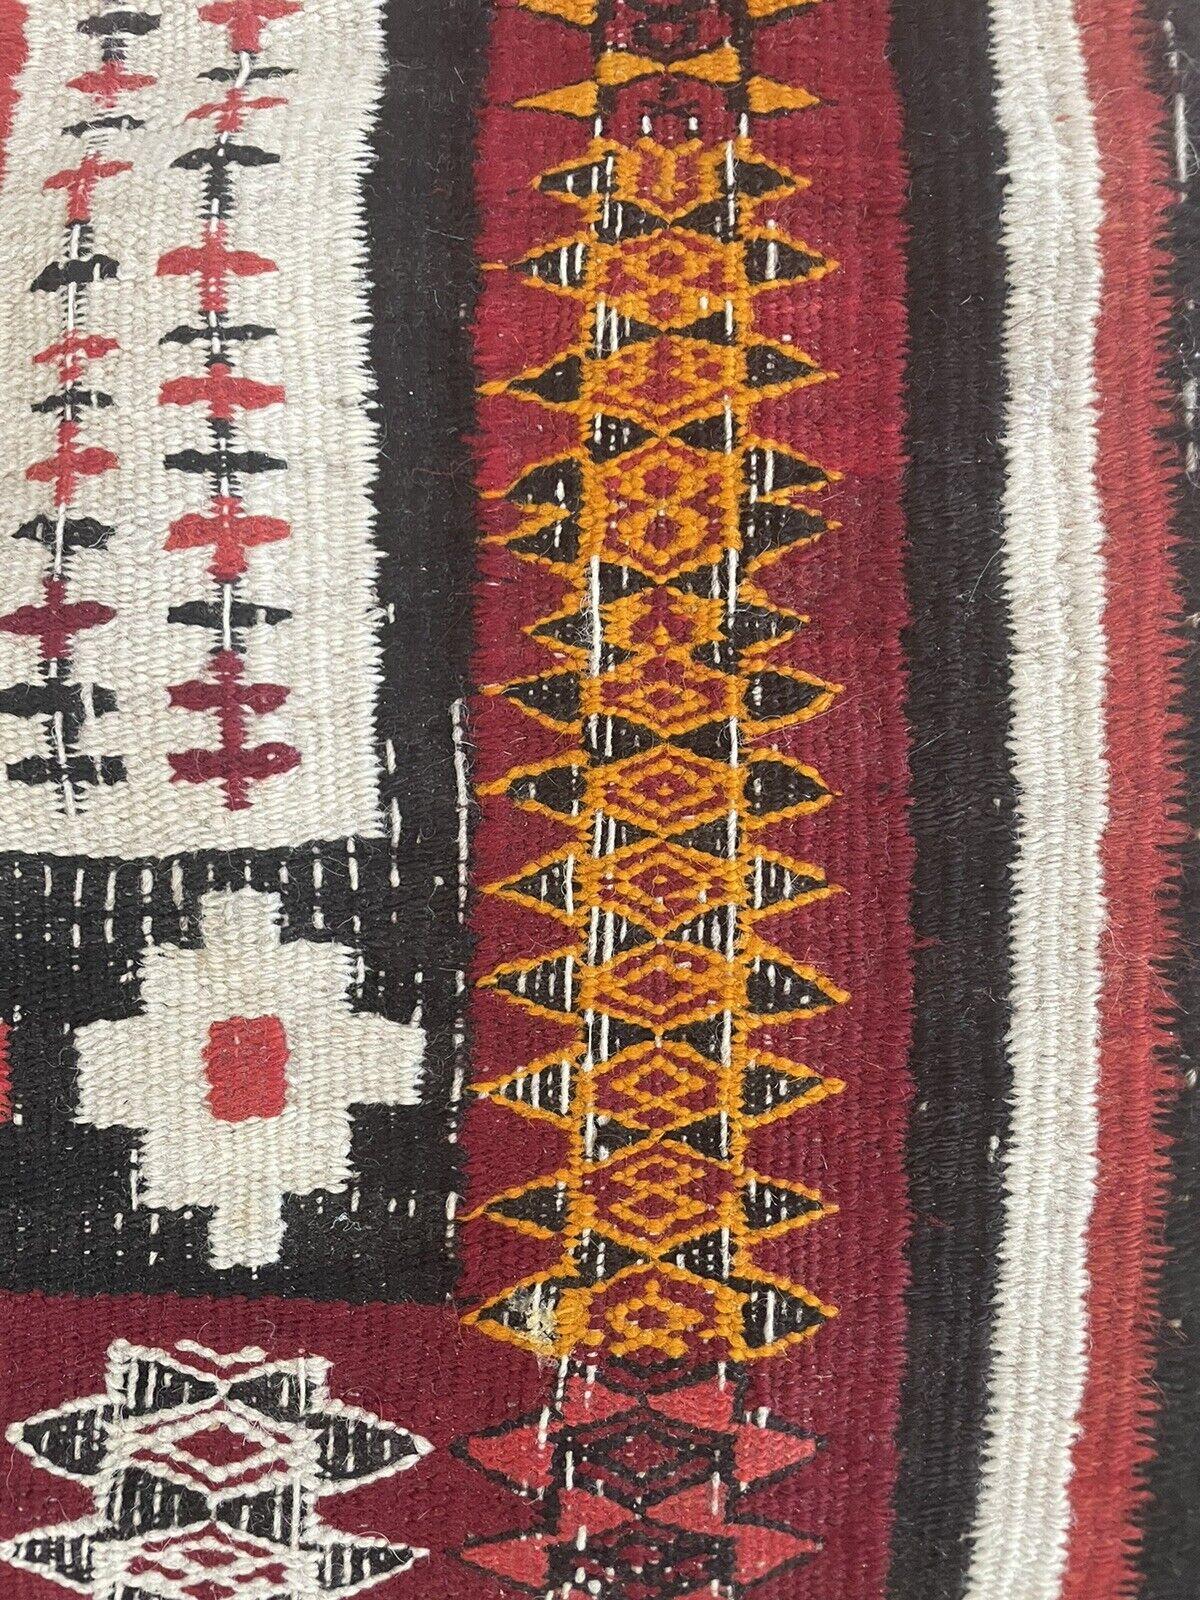 Handmade Antique Moroccan Berber Kilim Rug 1.9' x 3.1', 1920s - 1N10 For Sale 2